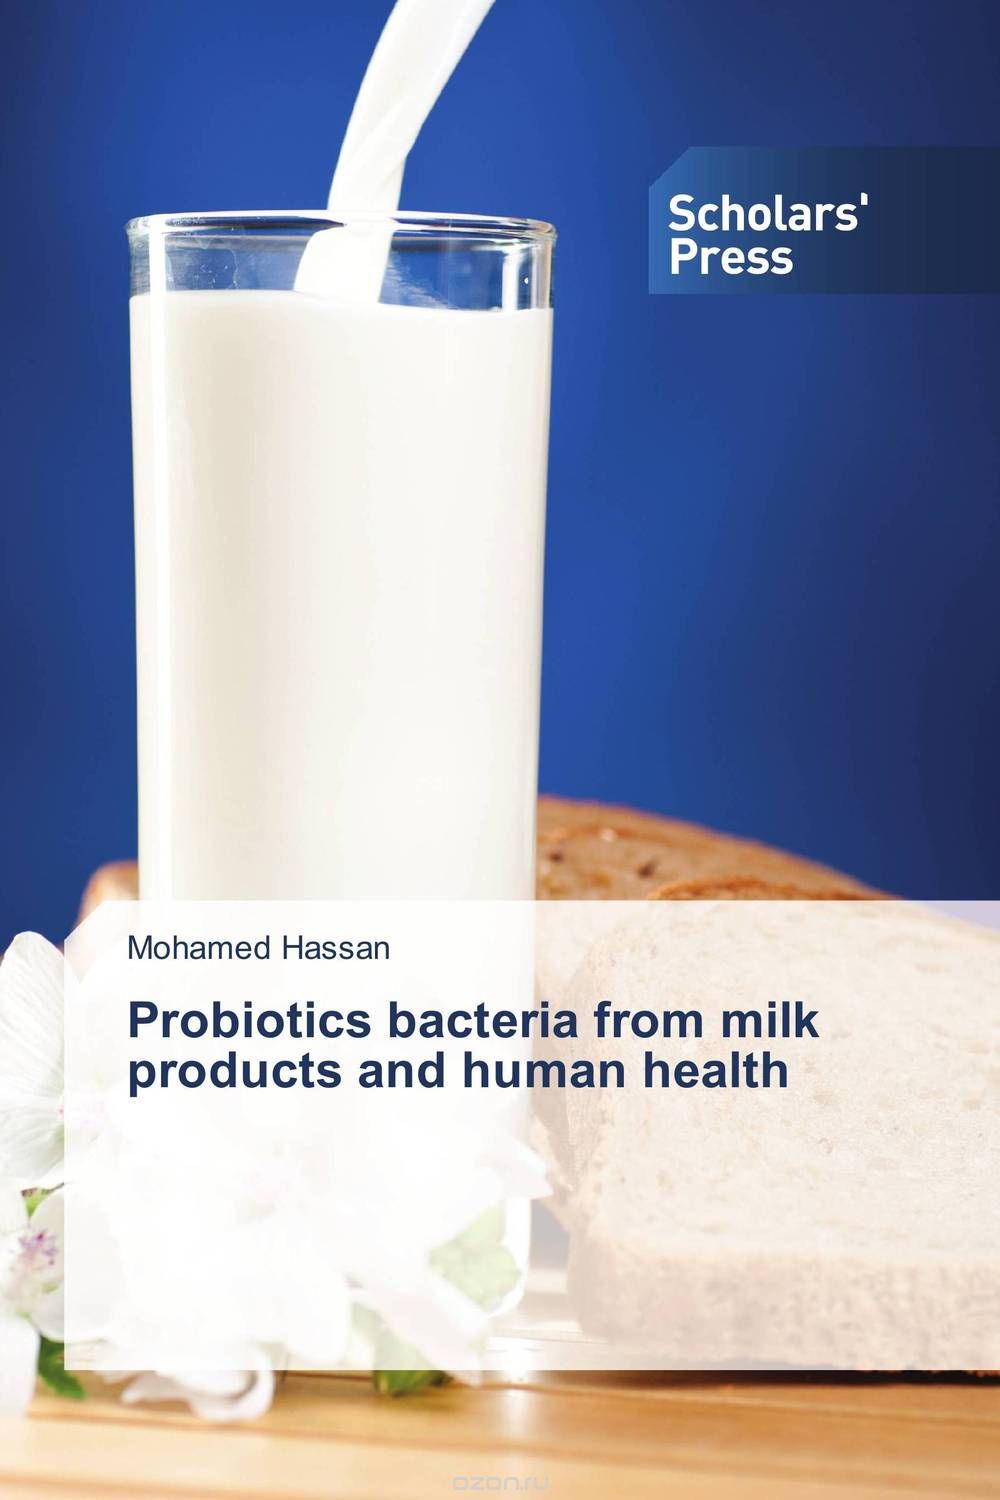 Скачать книгу "Probiotics bacteria from milk products and human health"